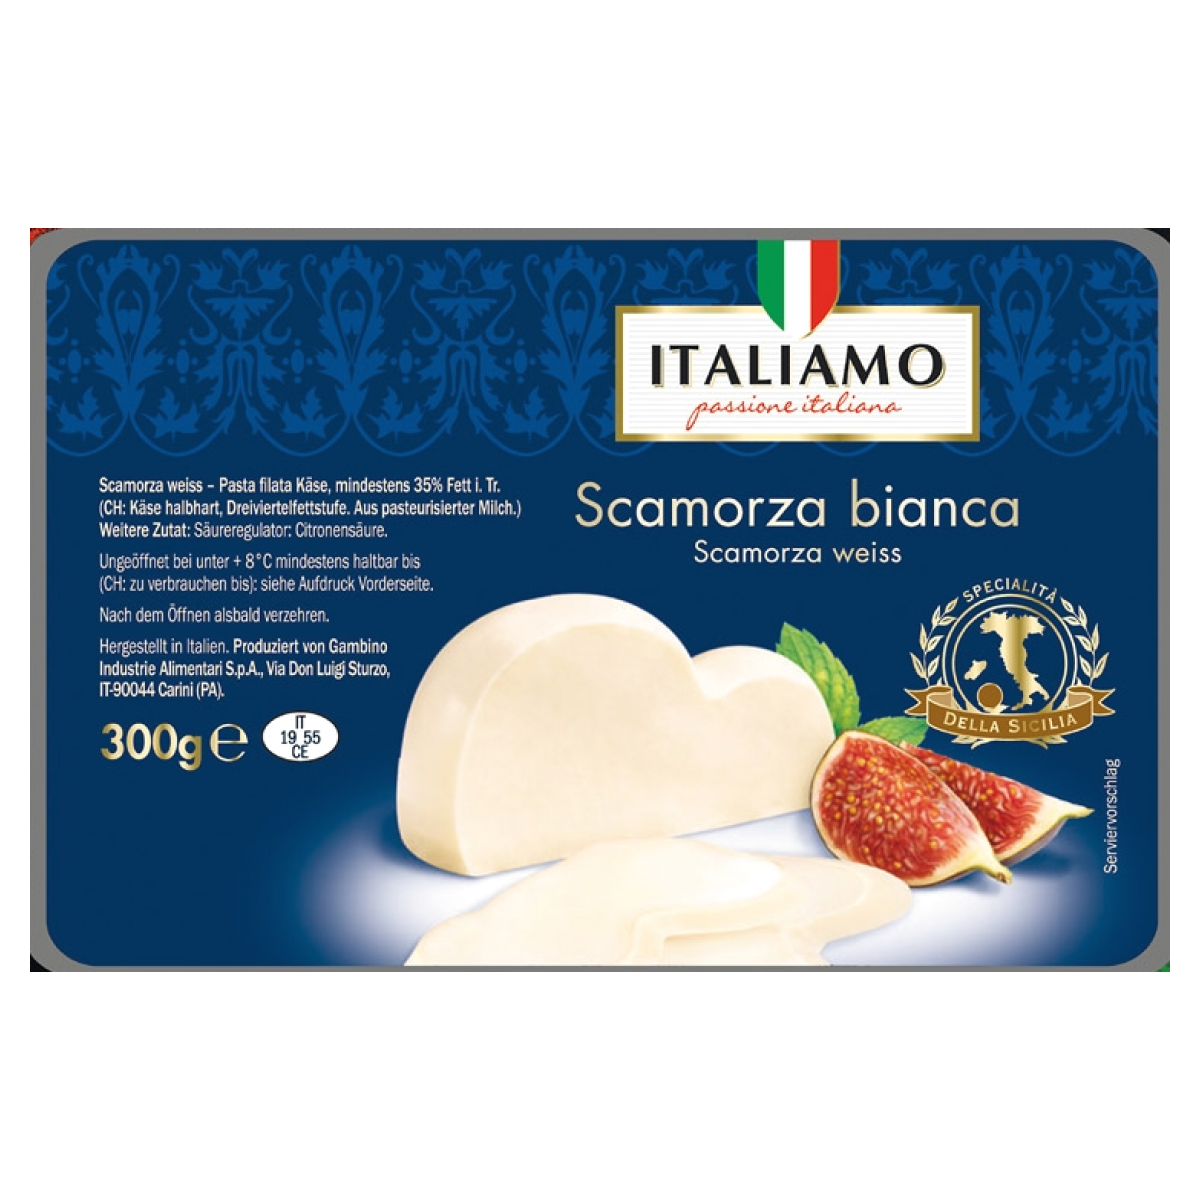 Sýr Scamorza Italiamo v akci levně